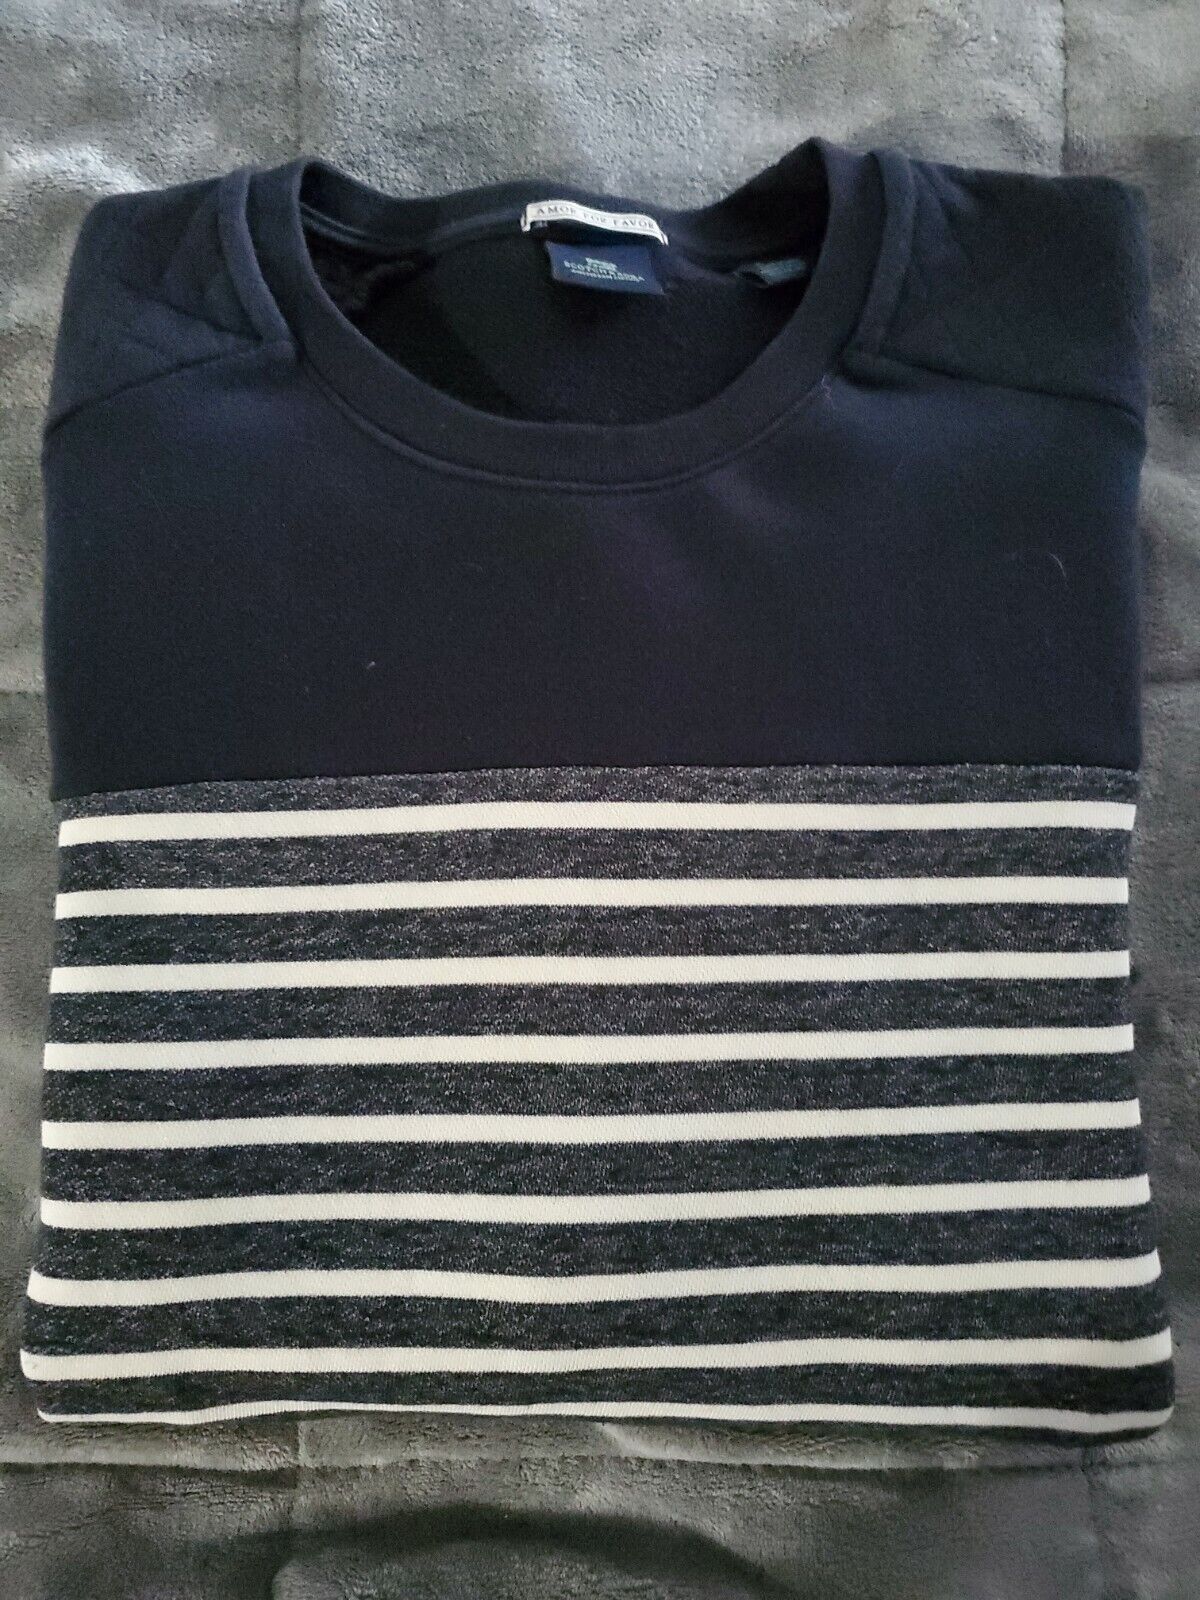 Scotch &amp; Amsterdam Couture AMOR FAVOR Pullover Striped Sweatshirt SZ | eBay